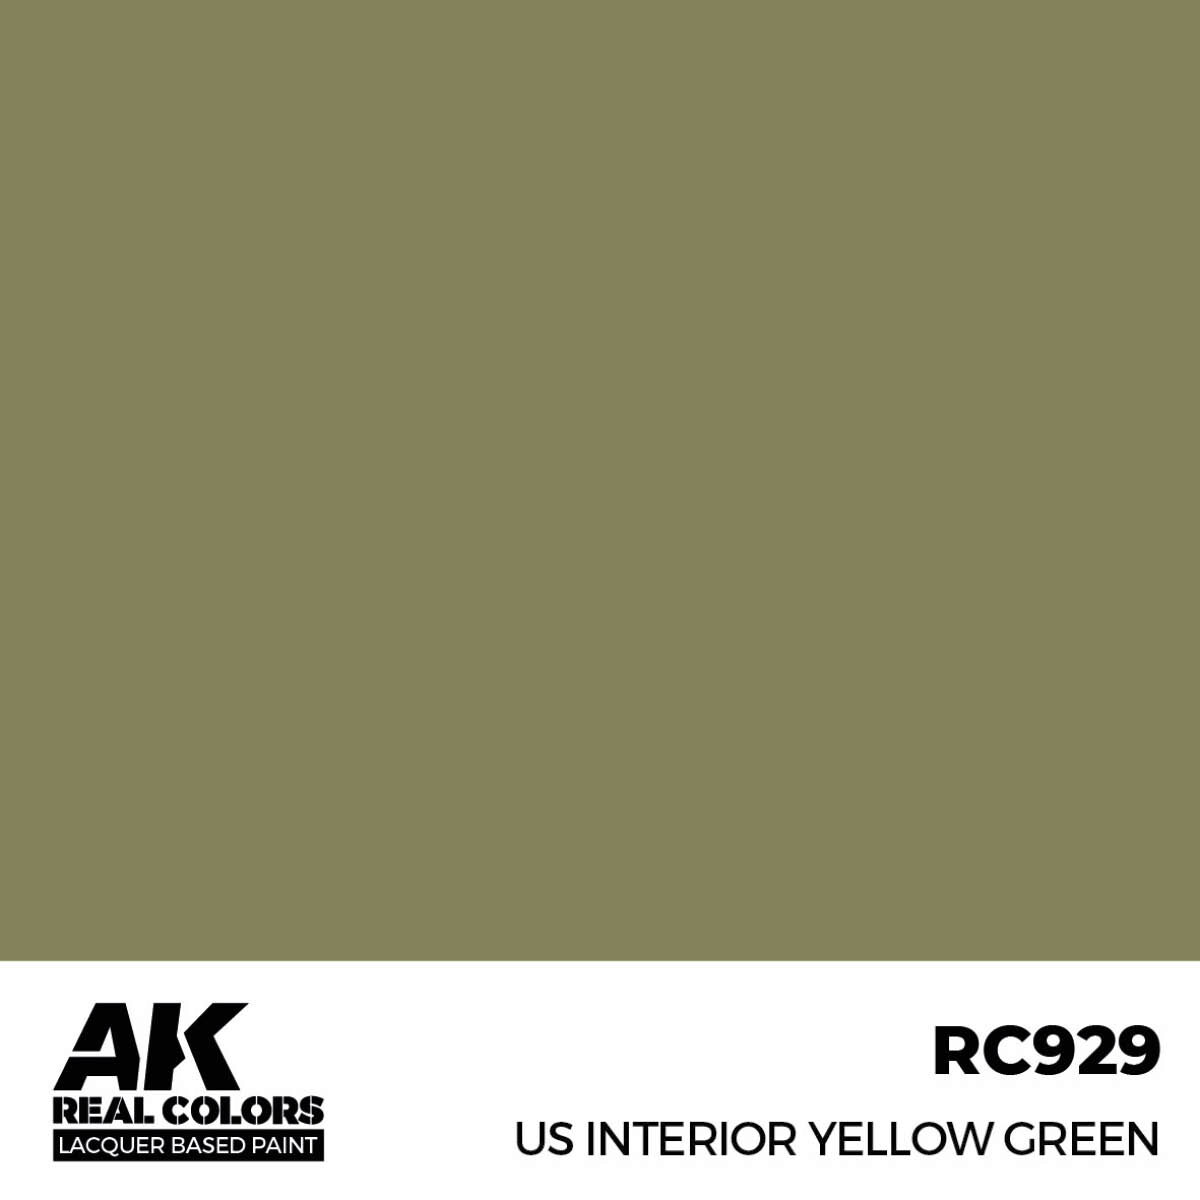 AK RC929 Real Colors US Interior Yellow Green 17 ml.